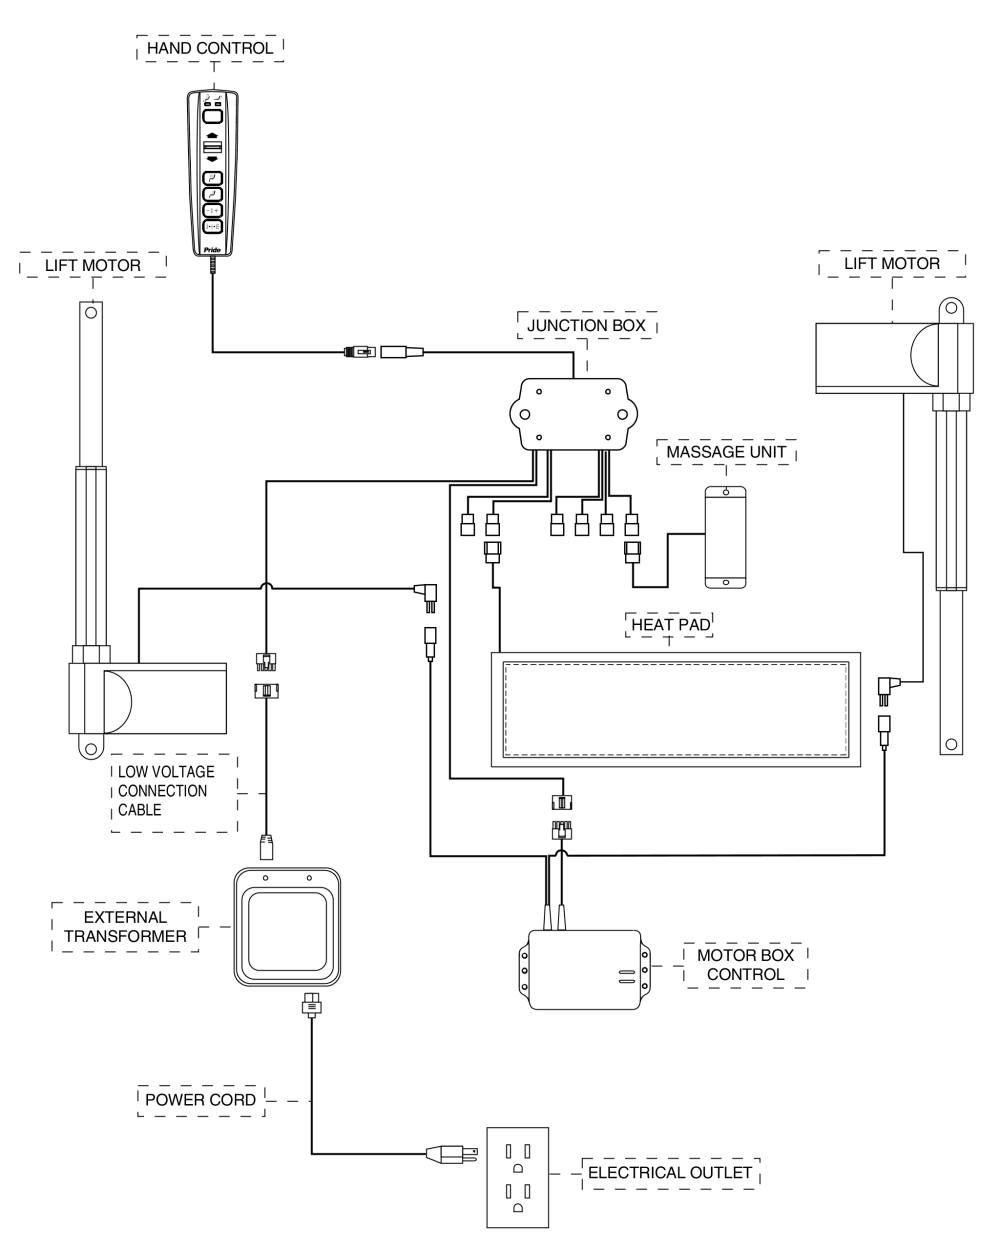 Electrical Diagram, De3luxe Heat And Massage, Us parts diagram